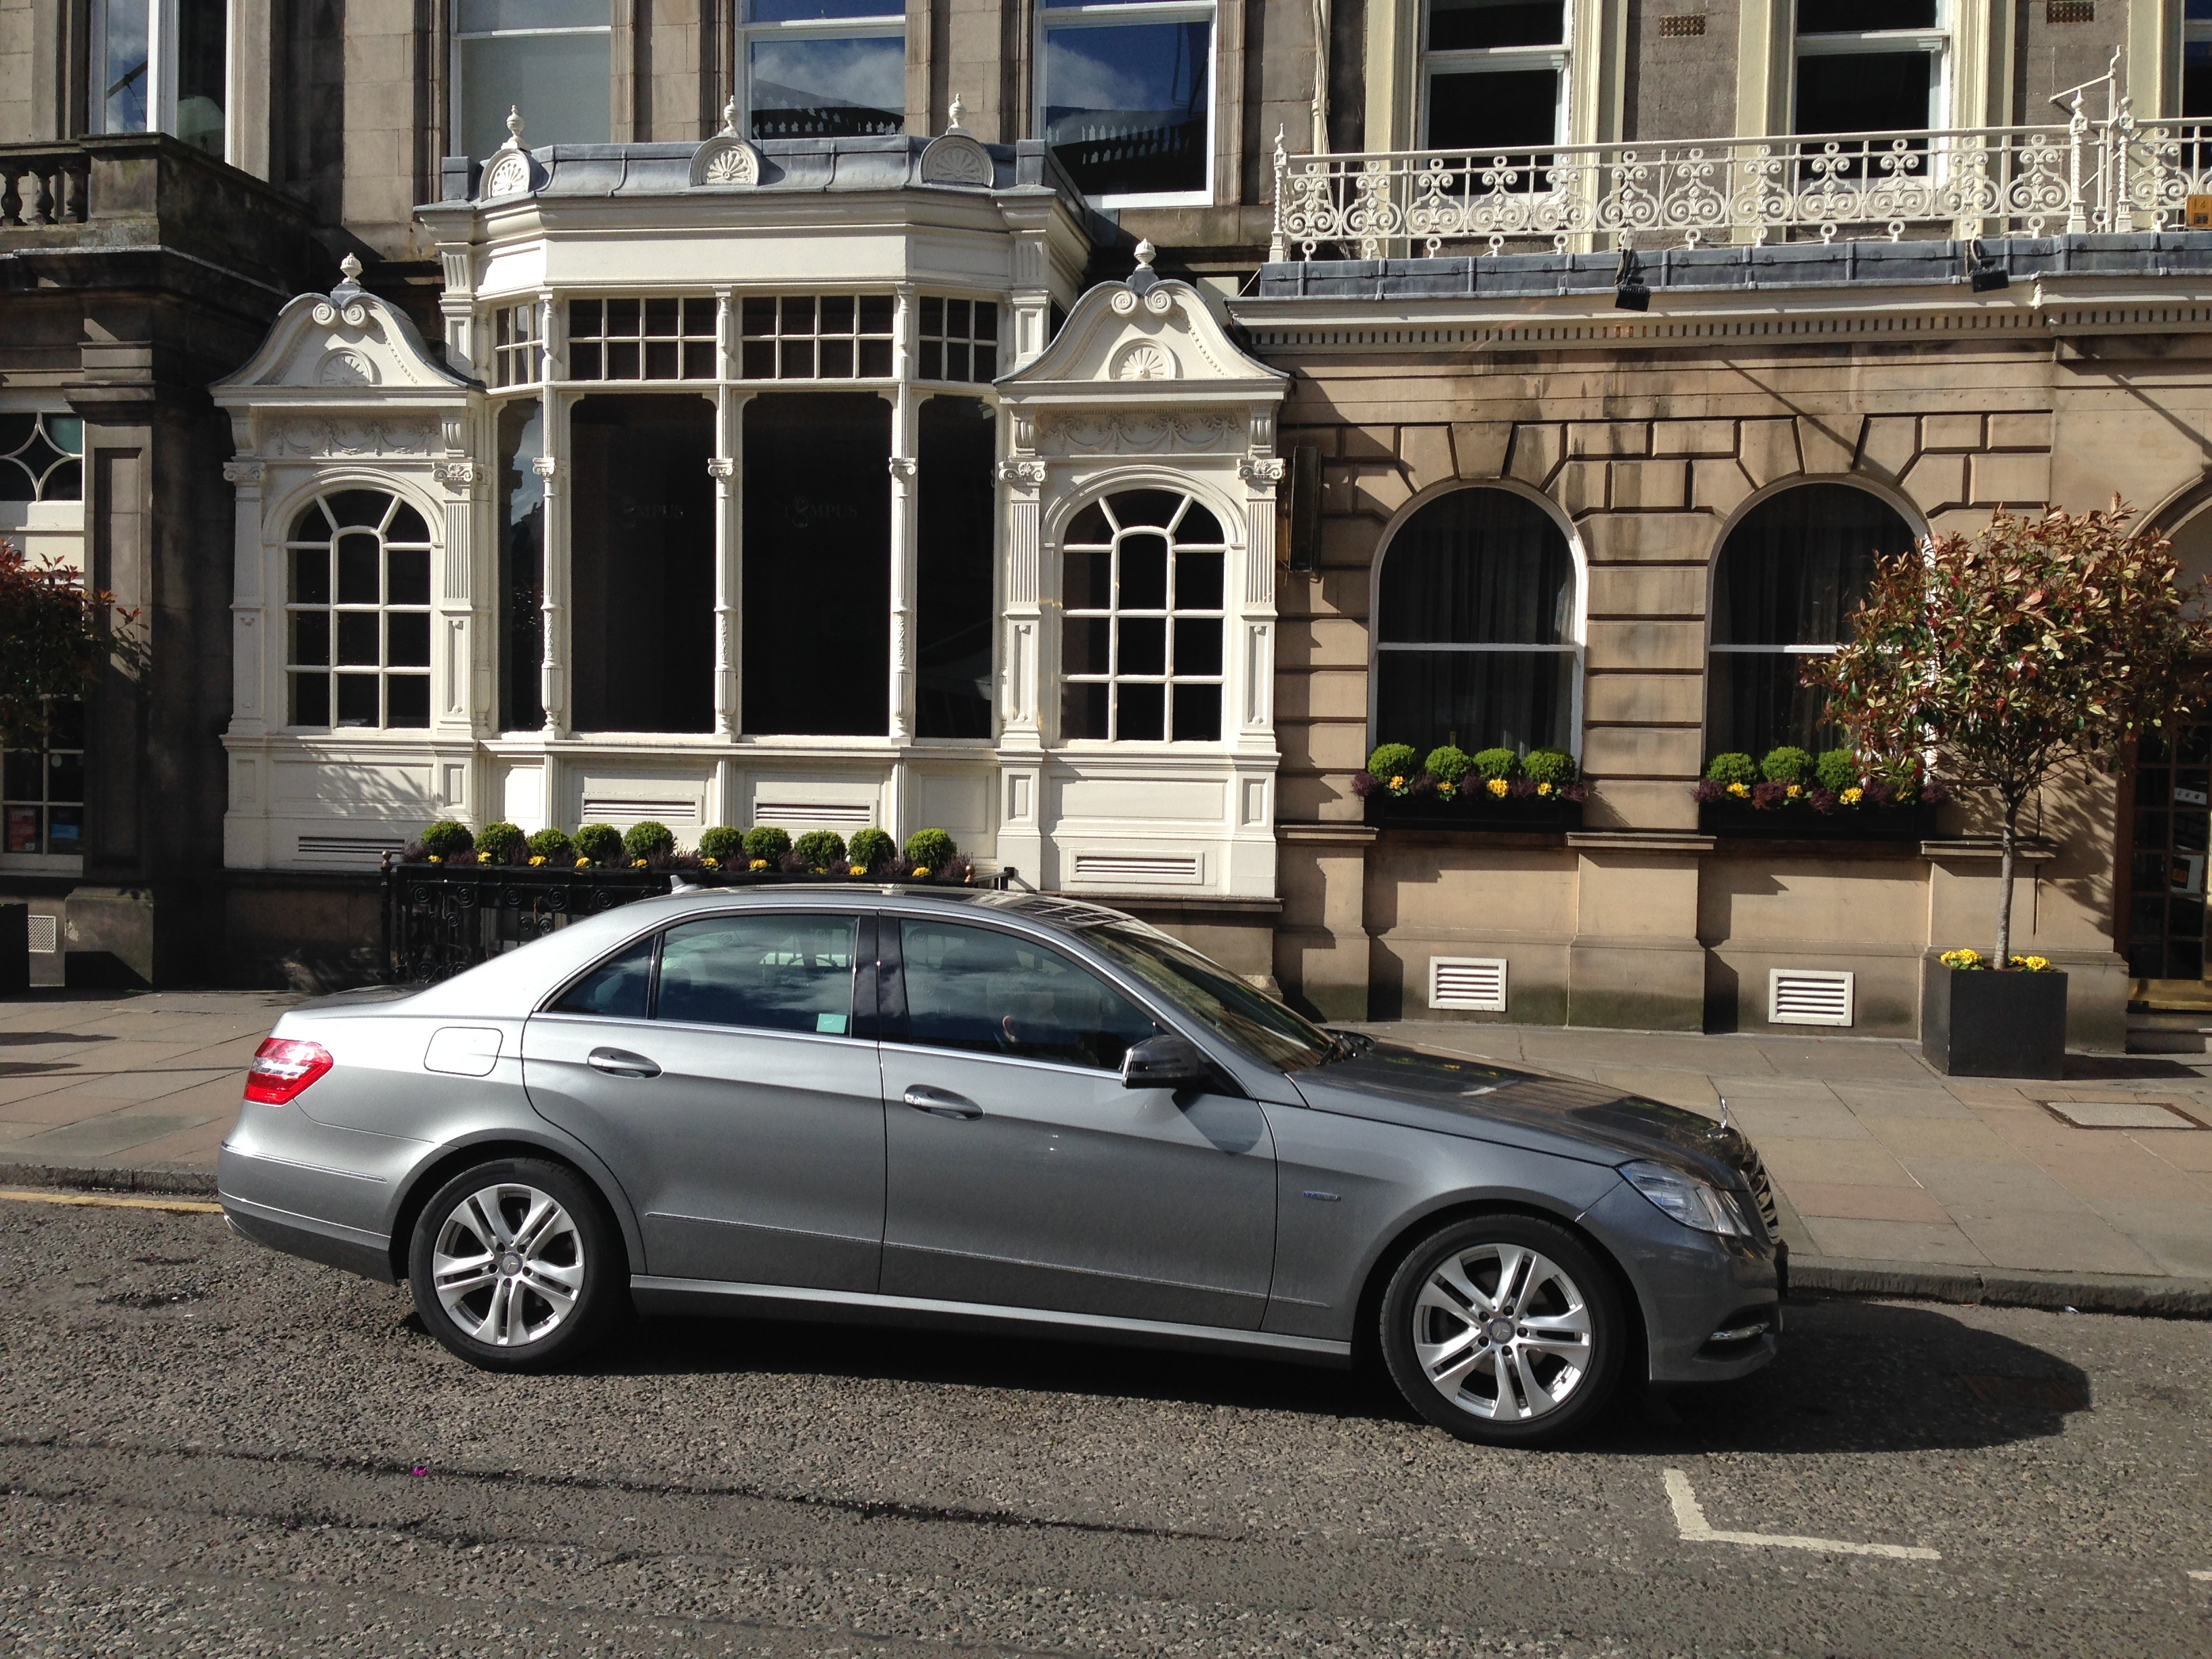 Edinburgh Scenic Day Tour by Chauffeur Driven Mercedes